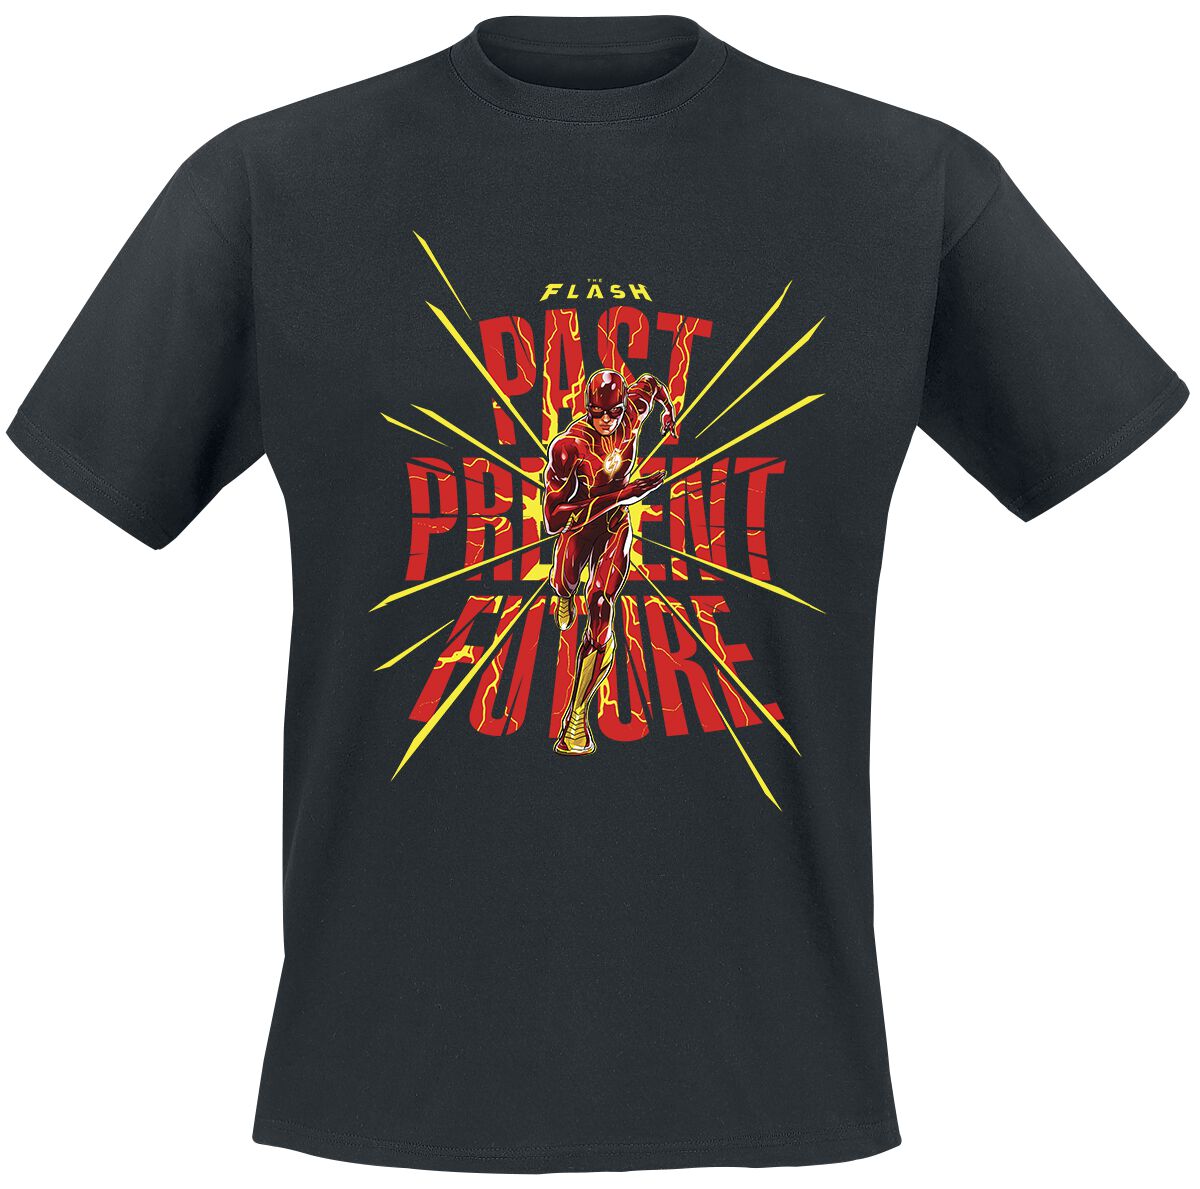 The Flash Past Present Future T-Shirt schwarz in L